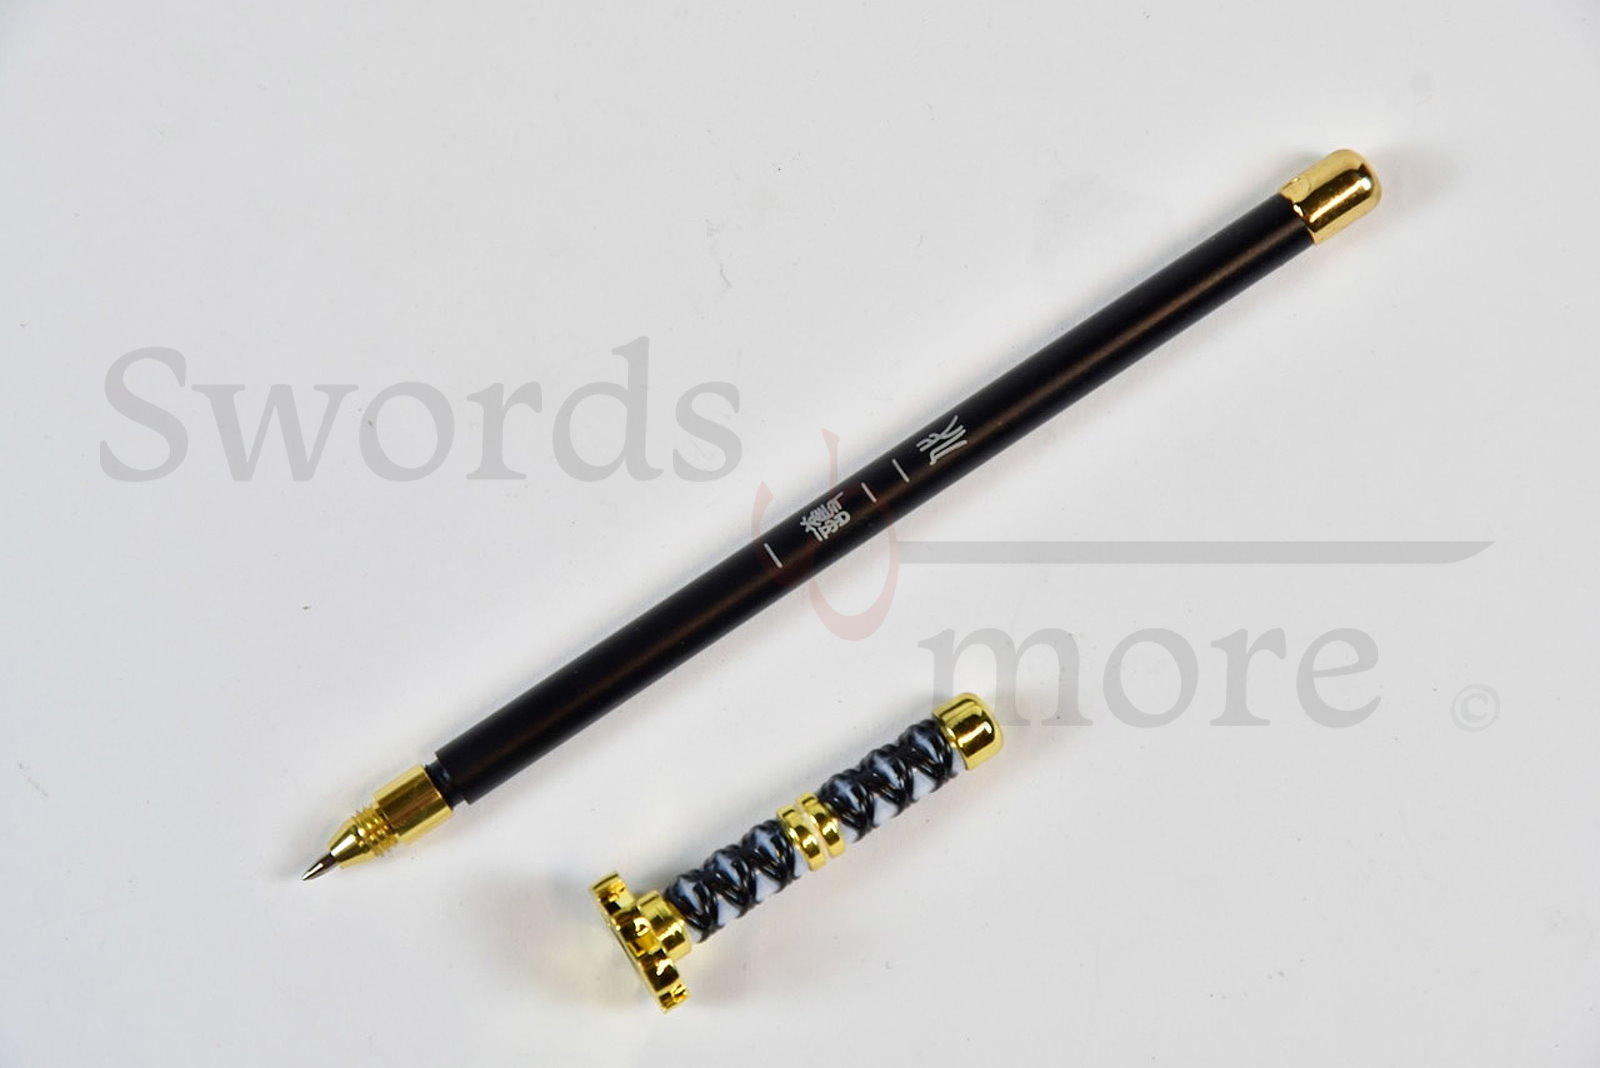 Bleach - Zanpakuto pen sword, miniature sword with pen holder